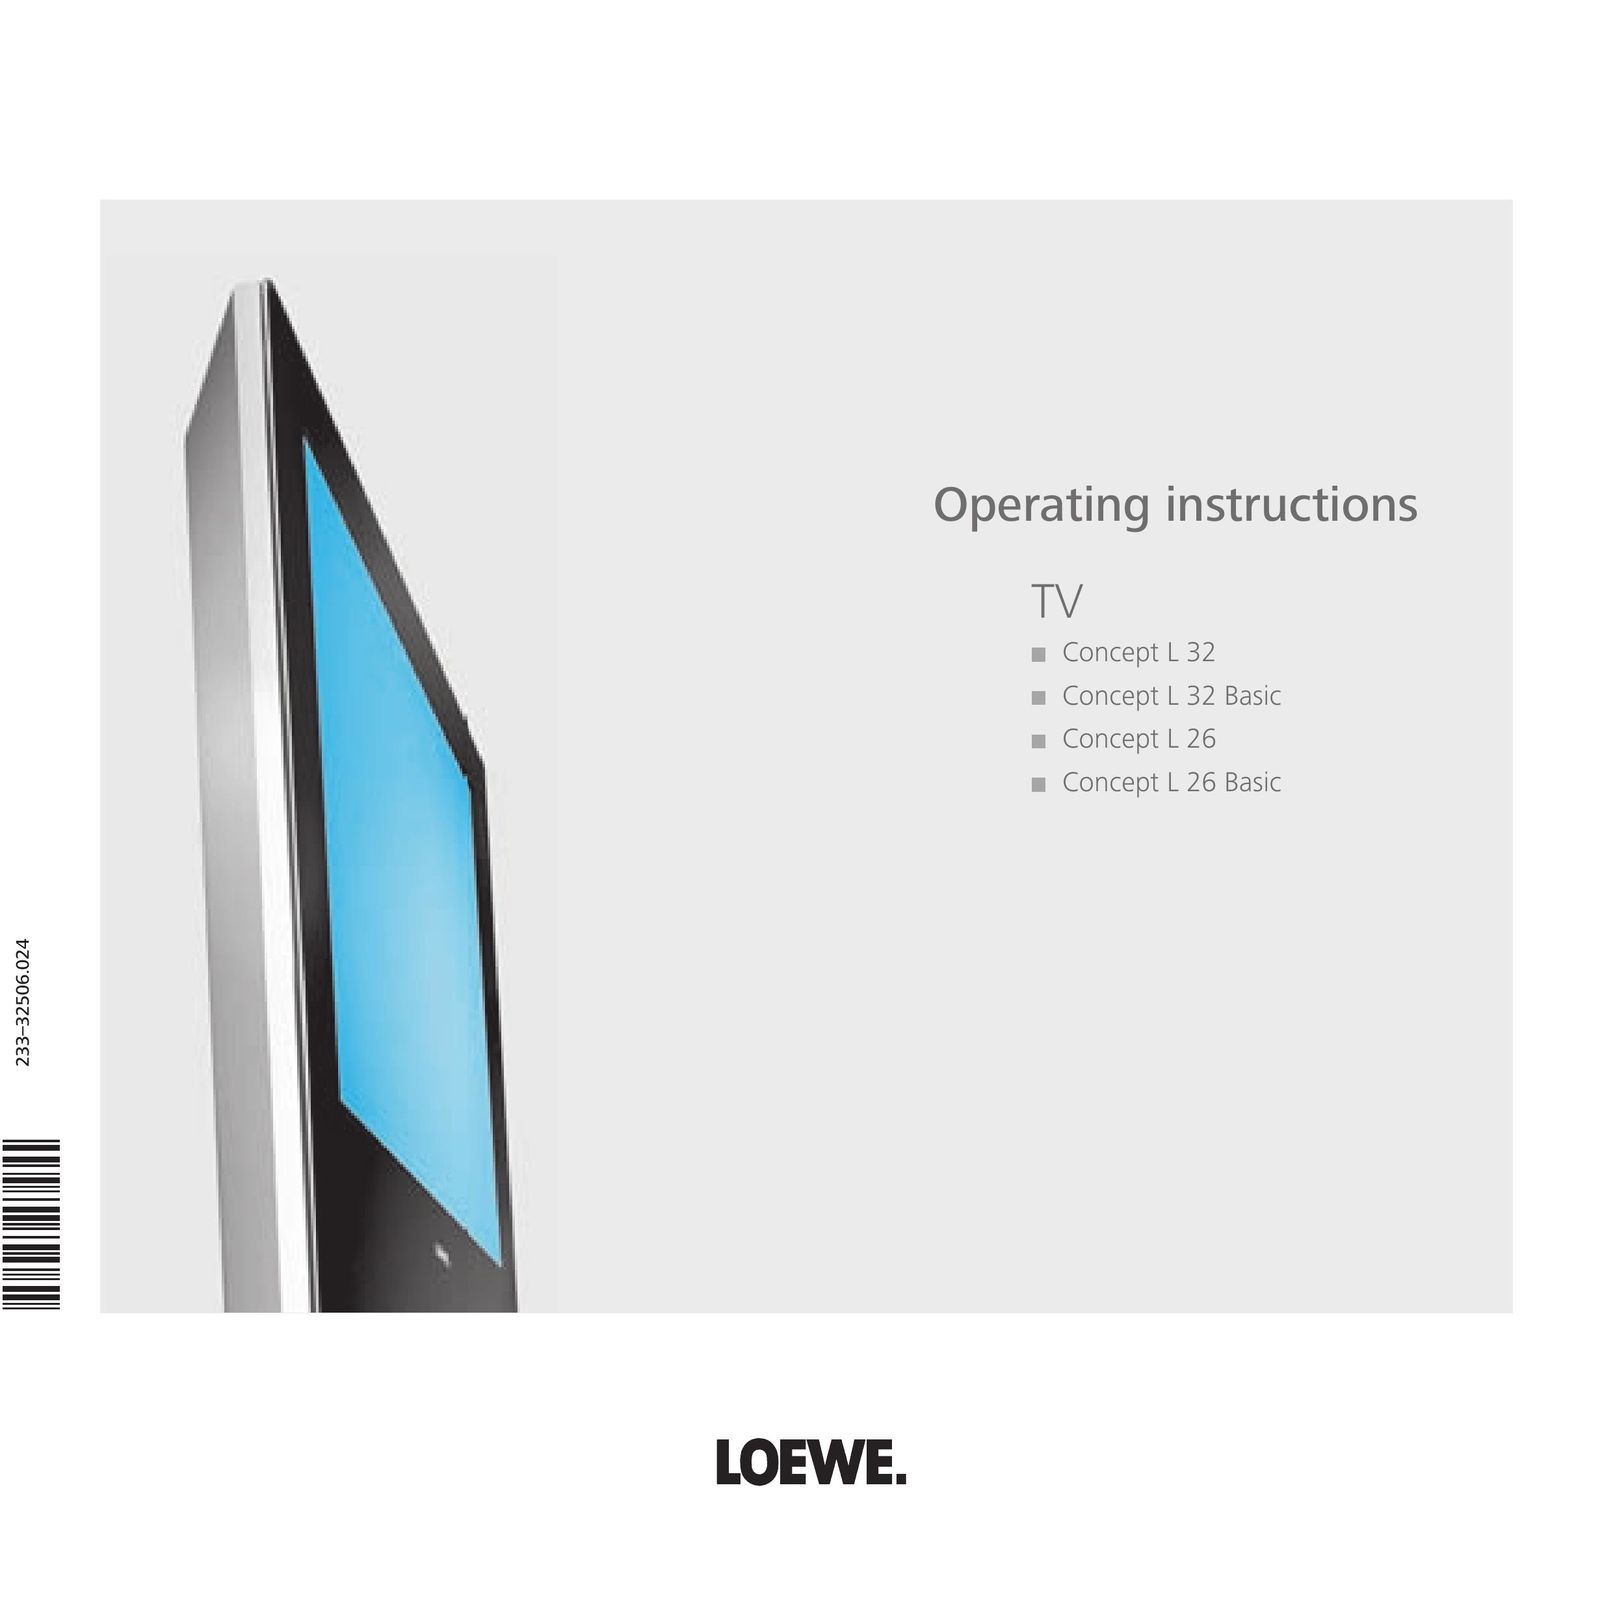 Loewe ConceptL26Basic Flat Panel Television User Manual